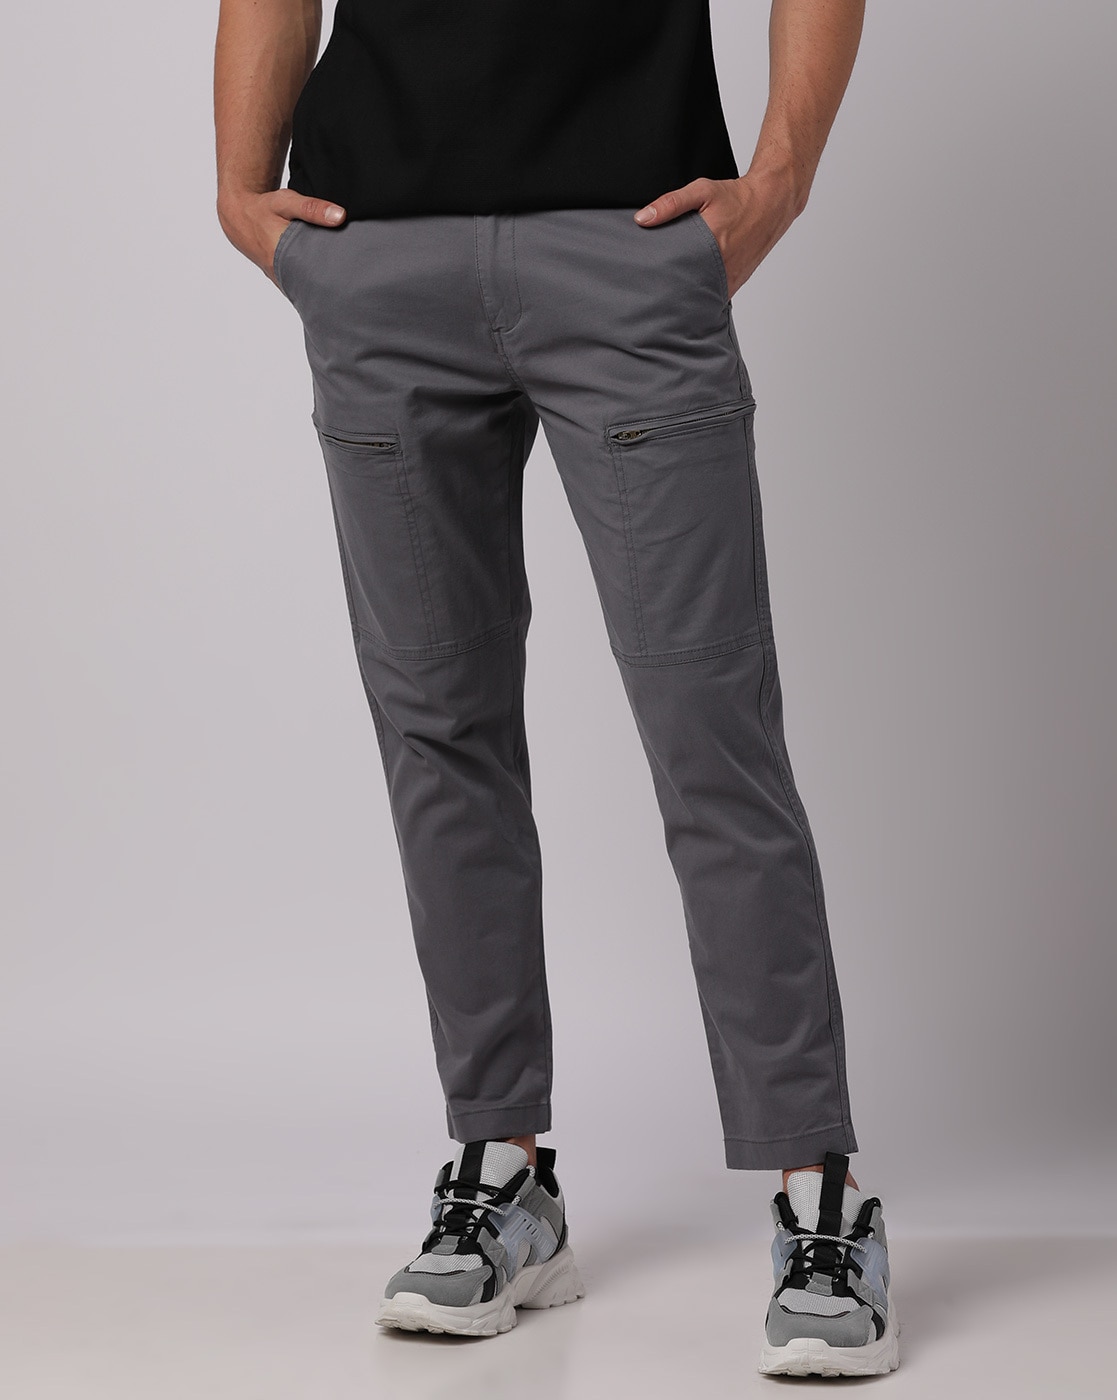 Buy Beige Trousers  Pants for Men by JAINISH Online  Ajiocom